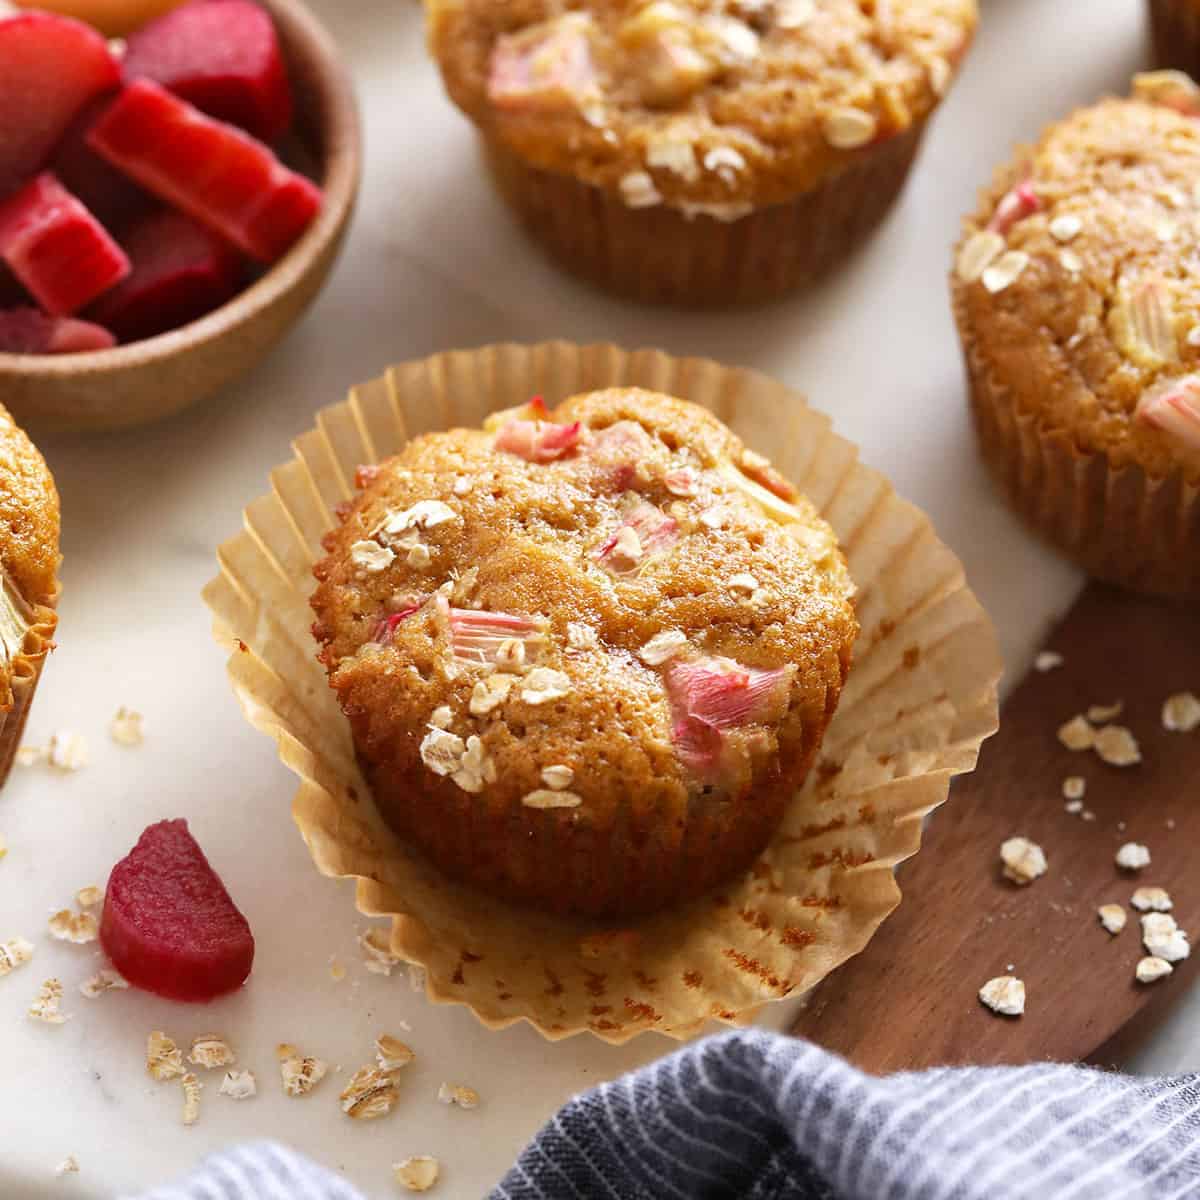 Rhubarb crumble muffins recipe